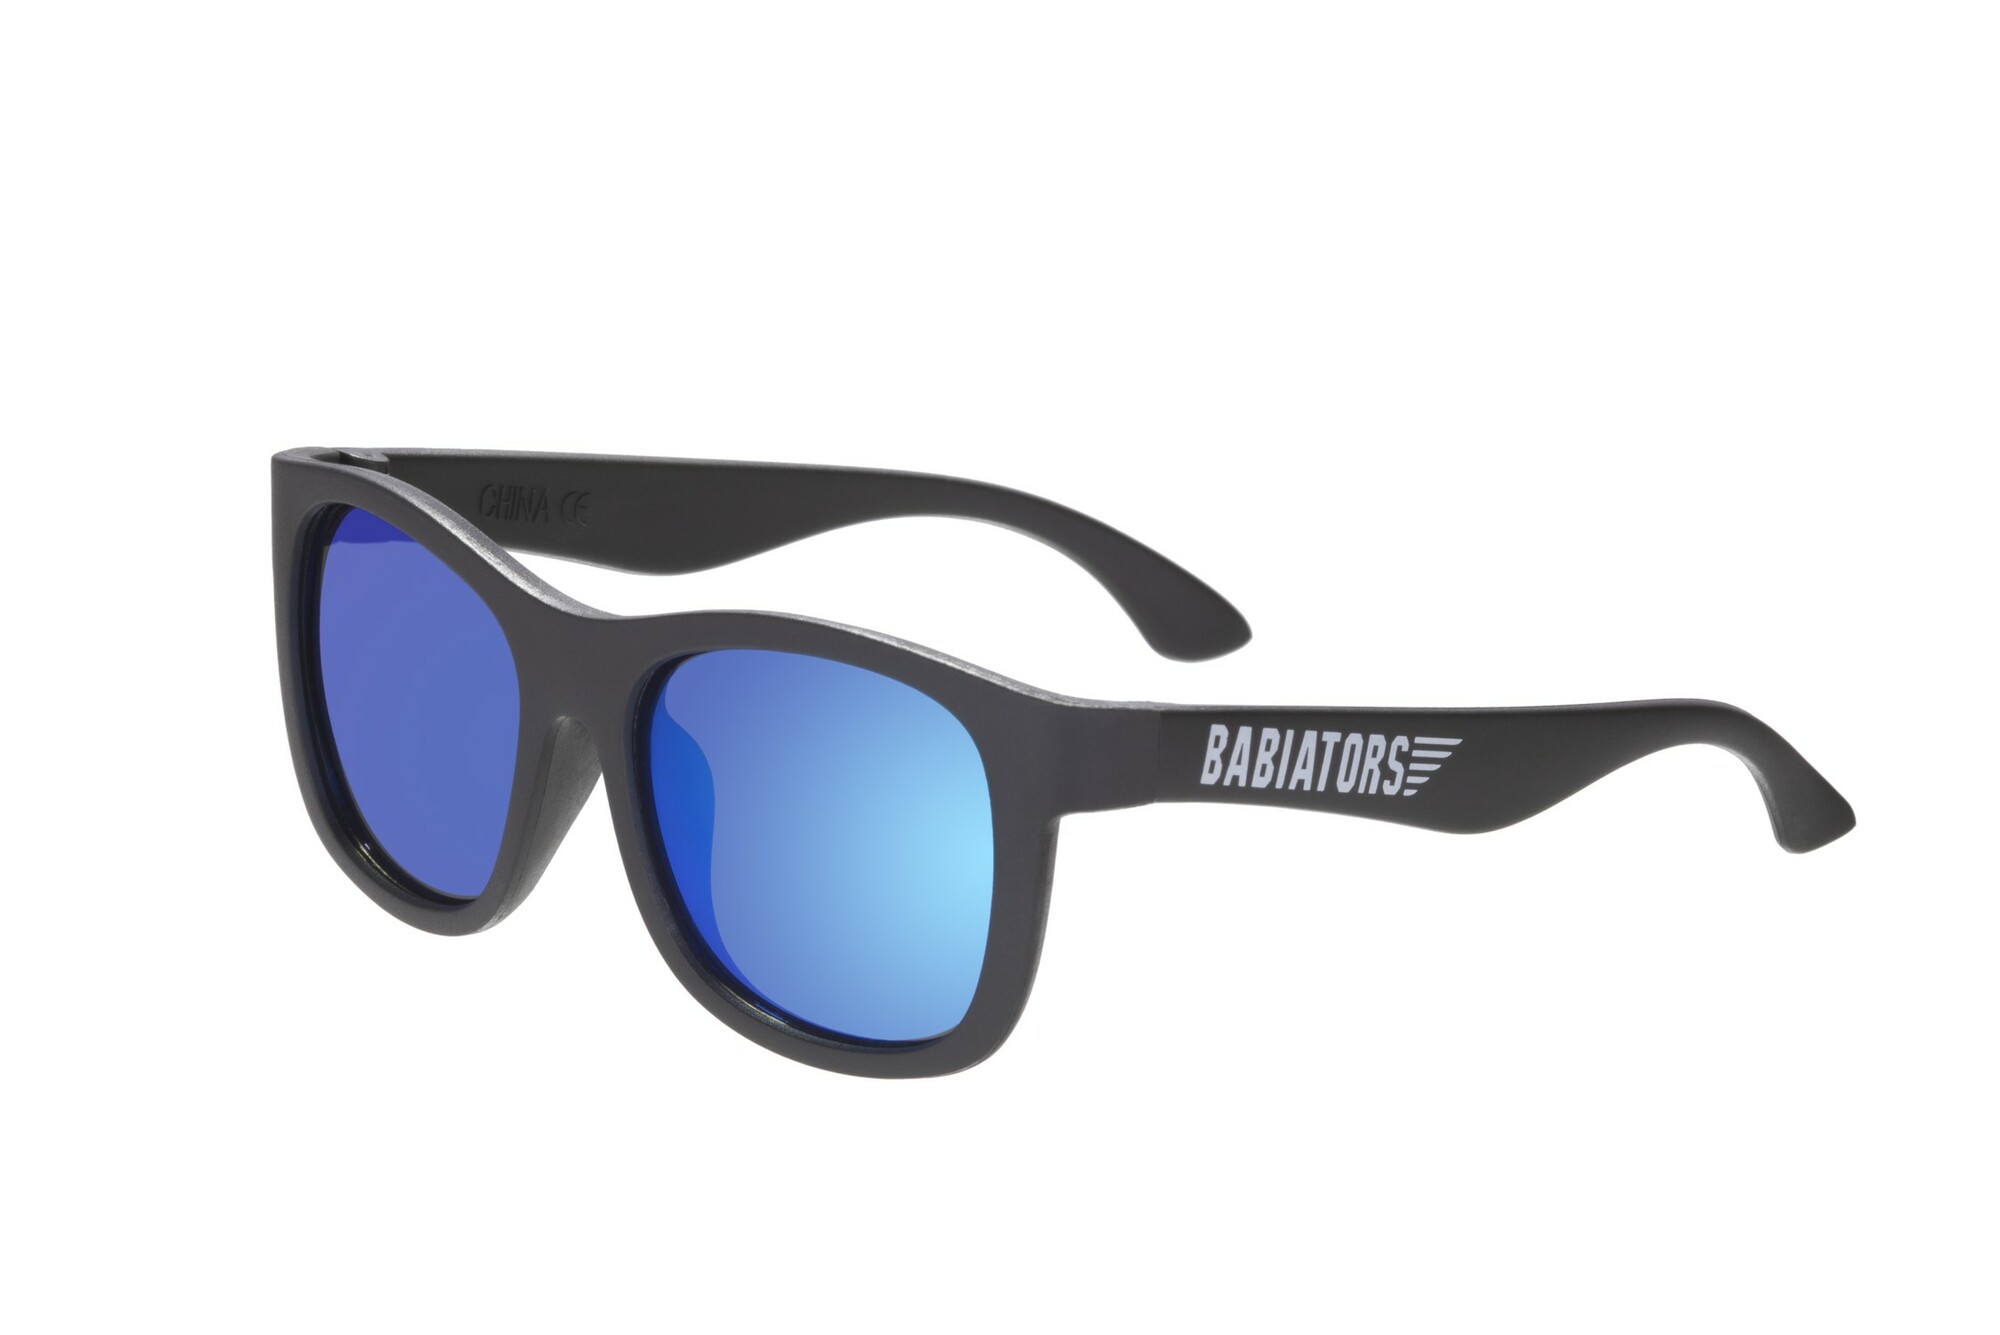 Babiators - polarized UV sunglasses for kids - The Scout - Black